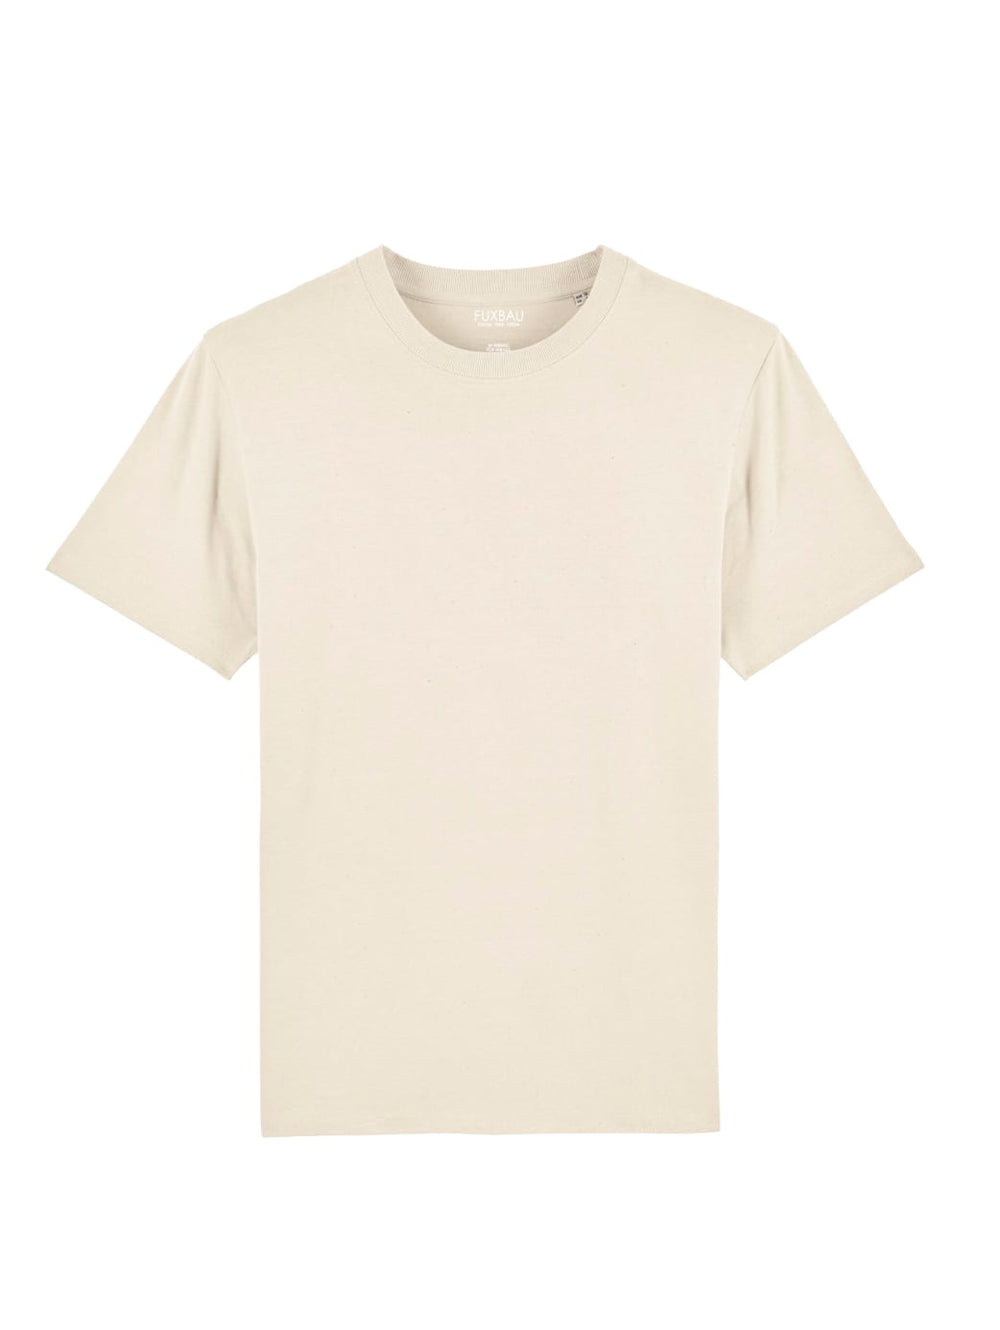 FUXBAU Standard Basic T-Shirt in natur aus 100% Biobaumwolle im 3er Pack.